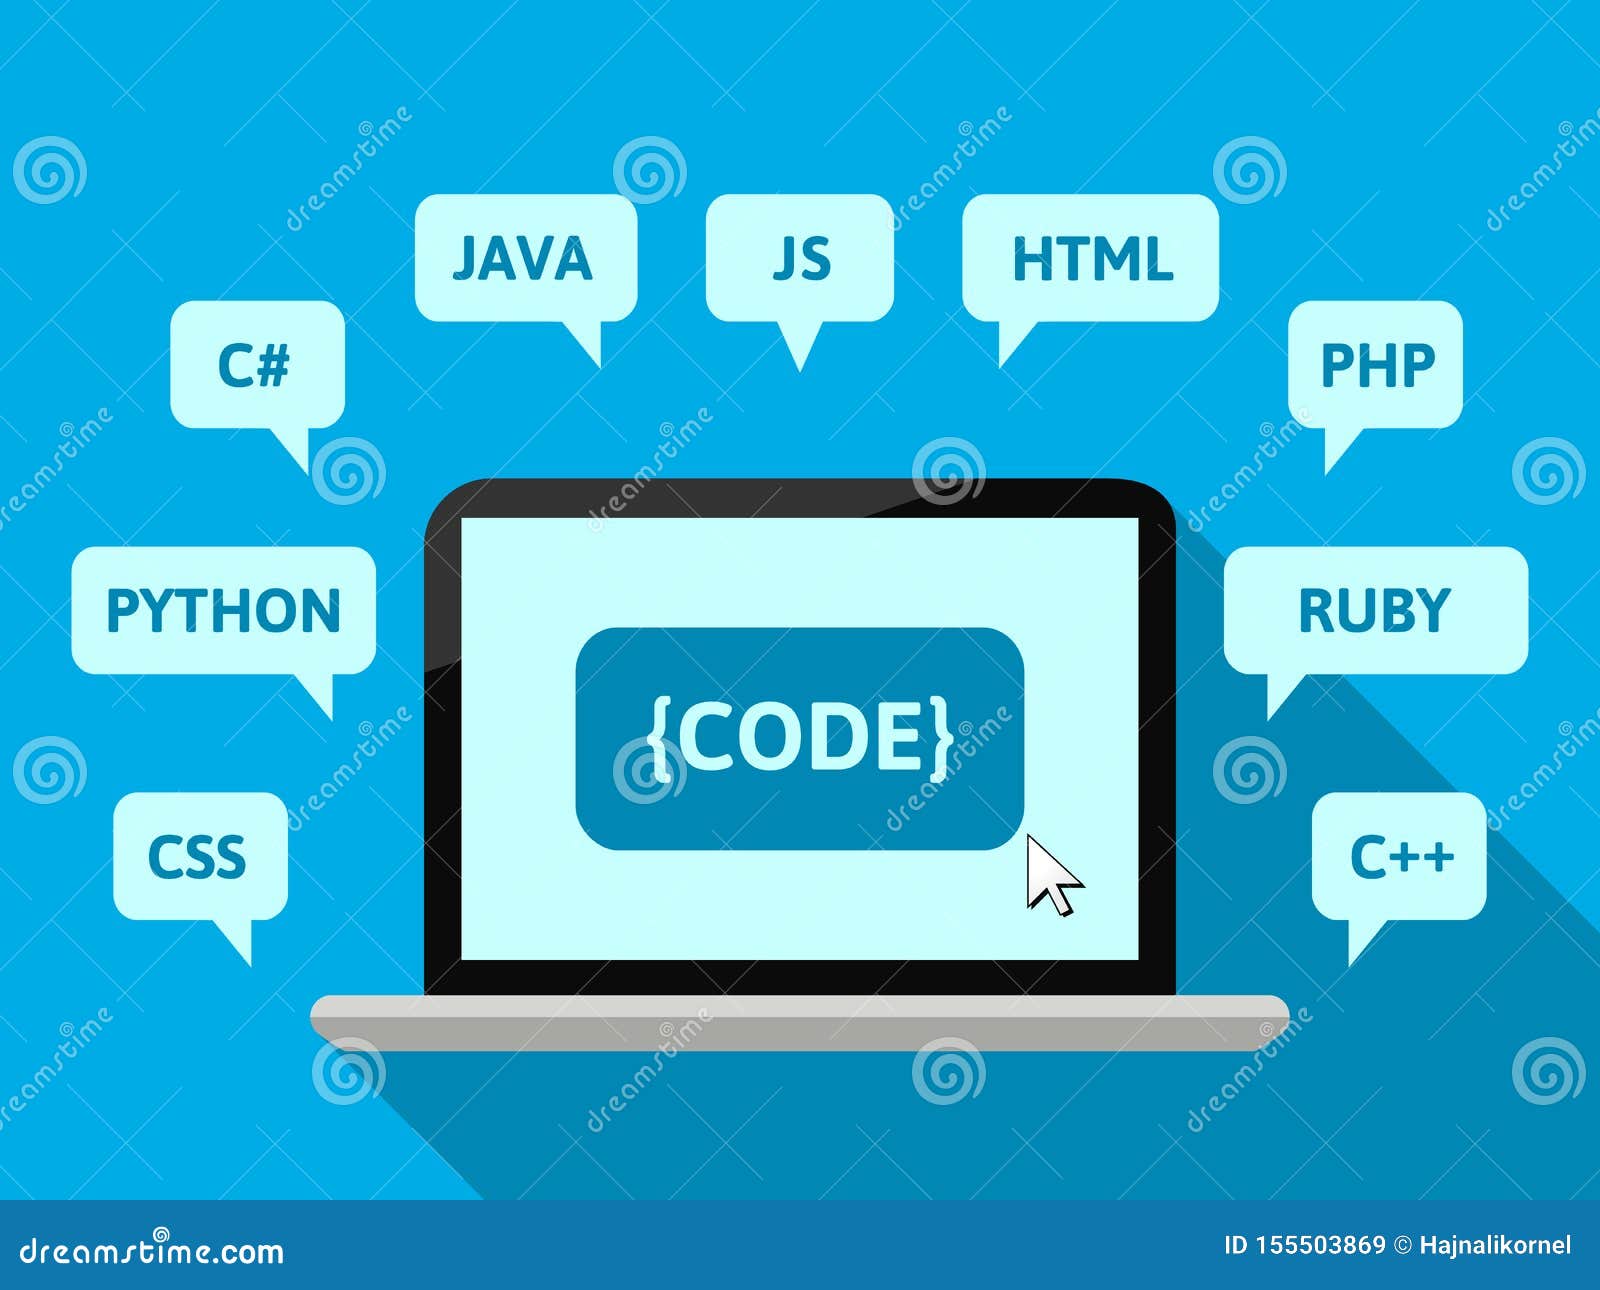 Html c php. Html CSS Python. Html язык программирования. Языки программирования html и CSS. Python html CSS js.